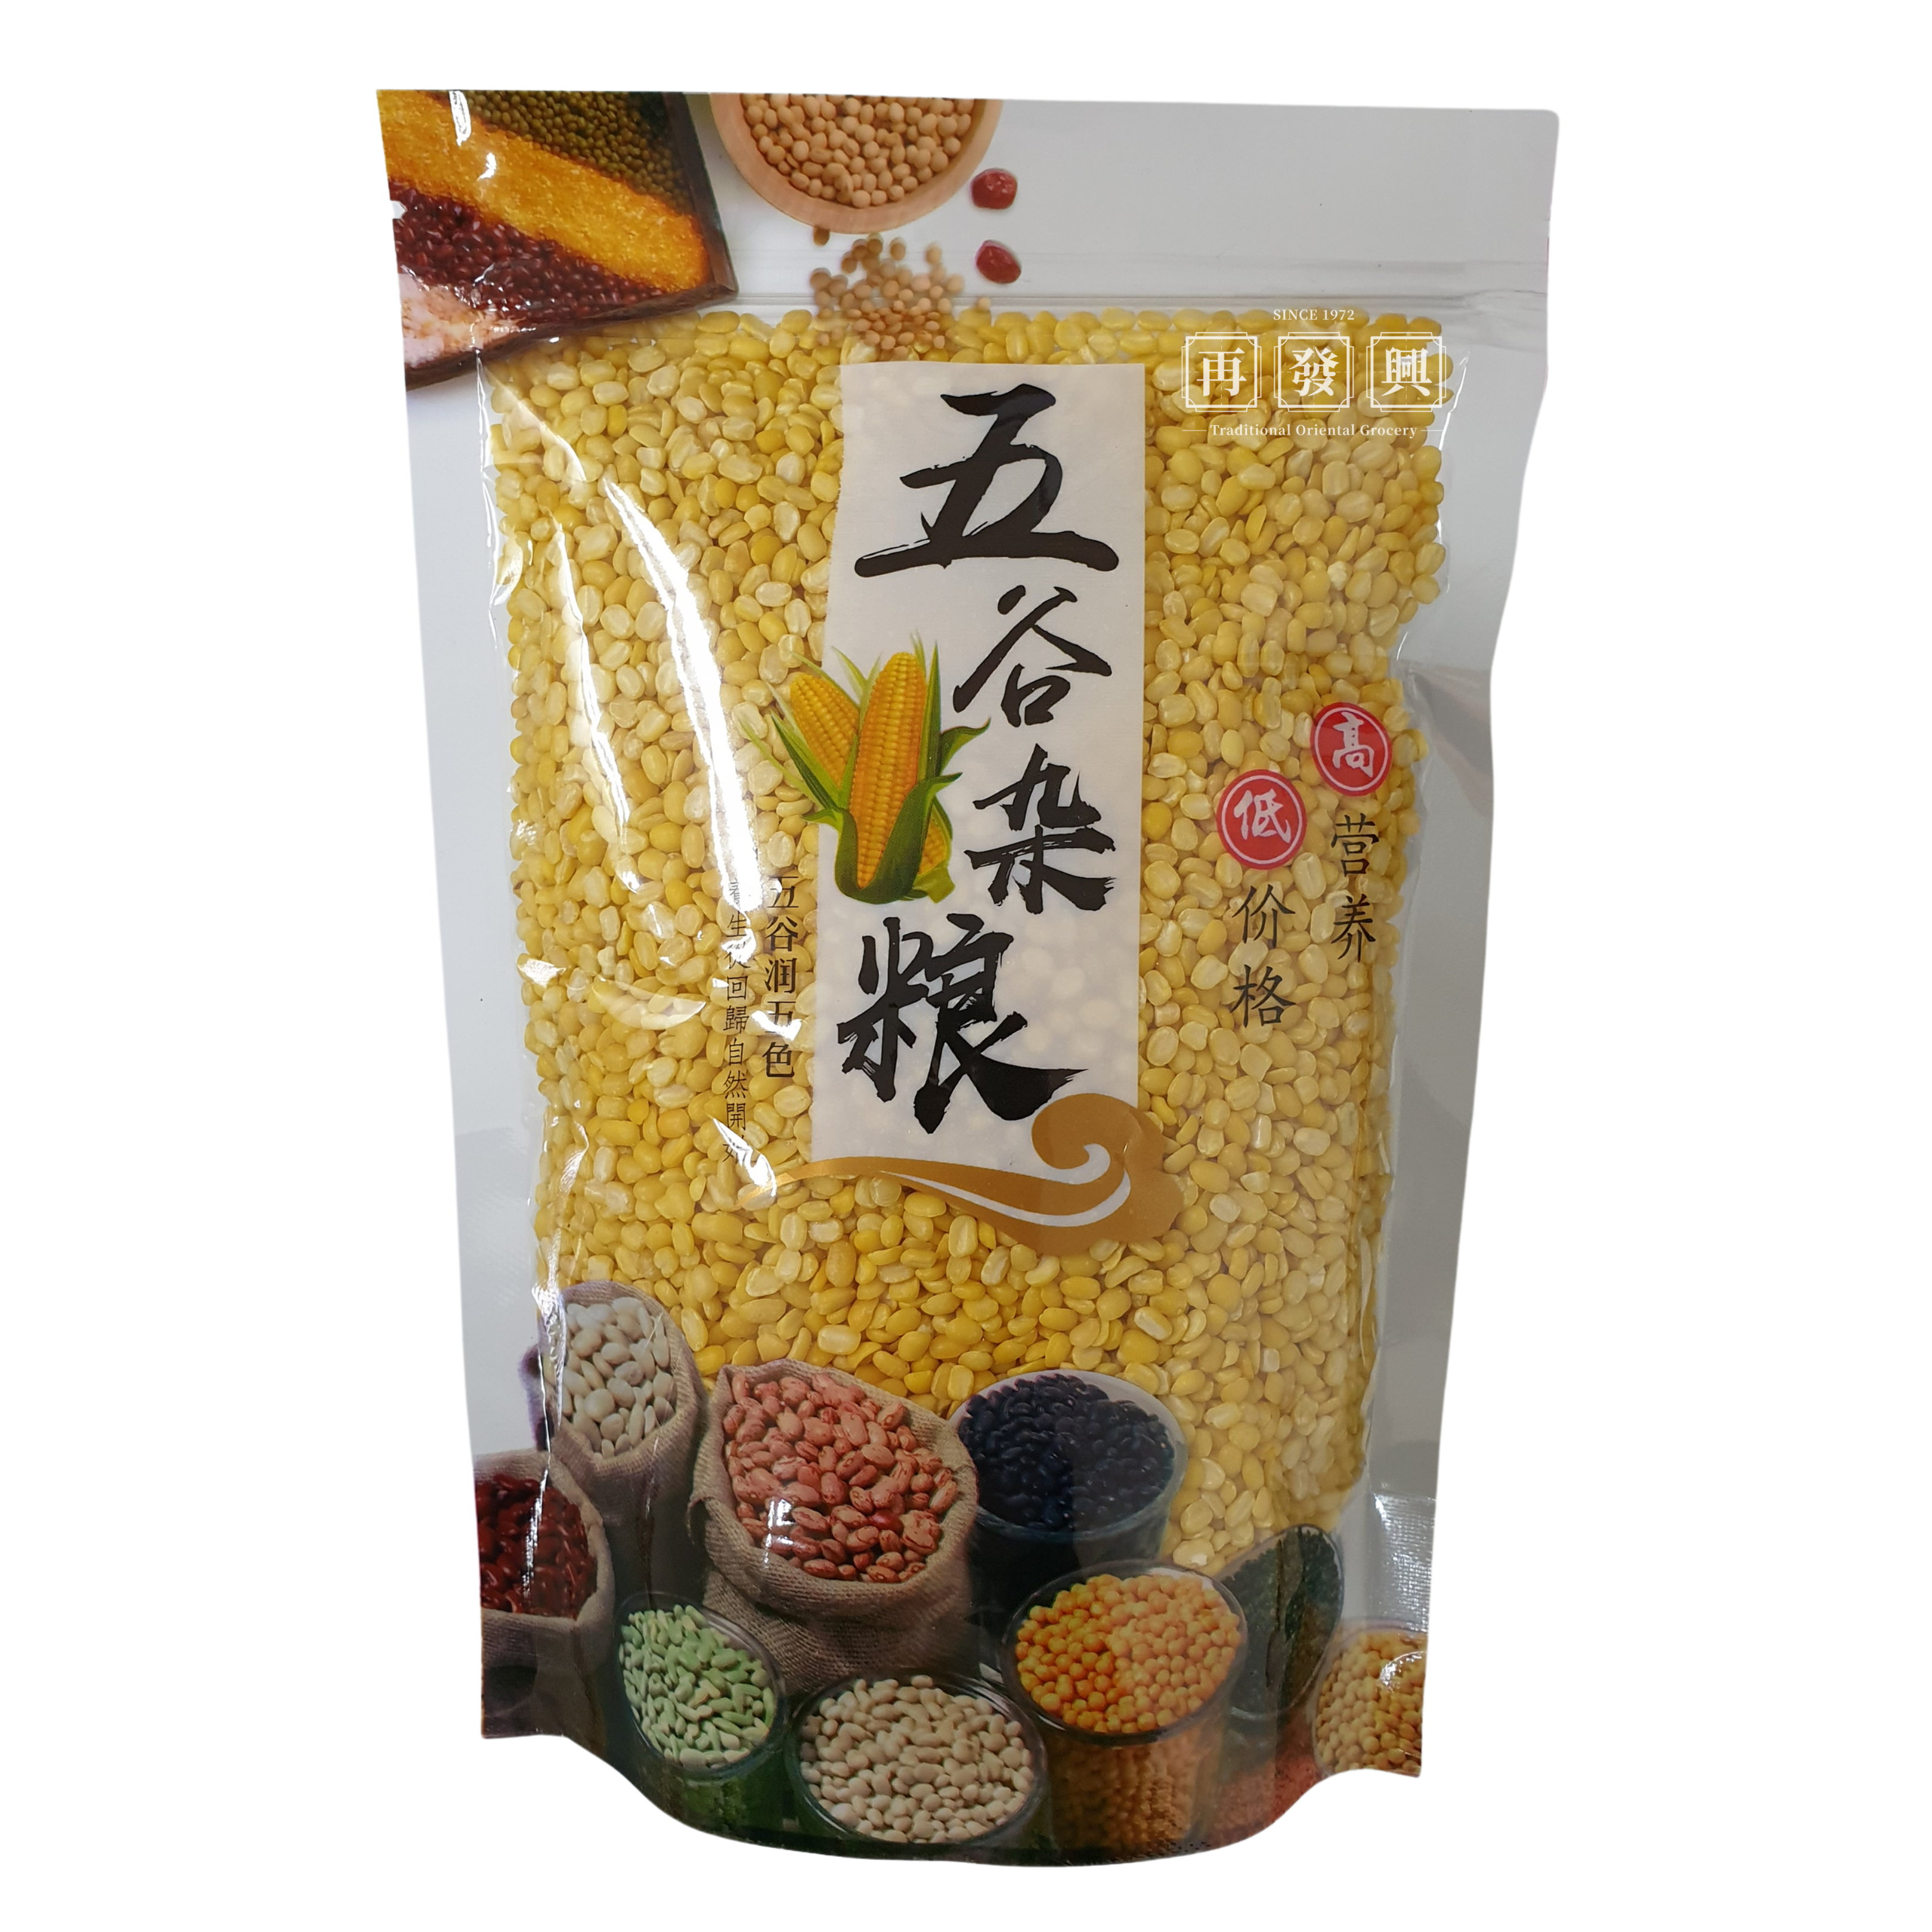 Coarse Grains Series Bean Pack: Mung Bean Split 五谷杂粮类(绿豆片) 500g